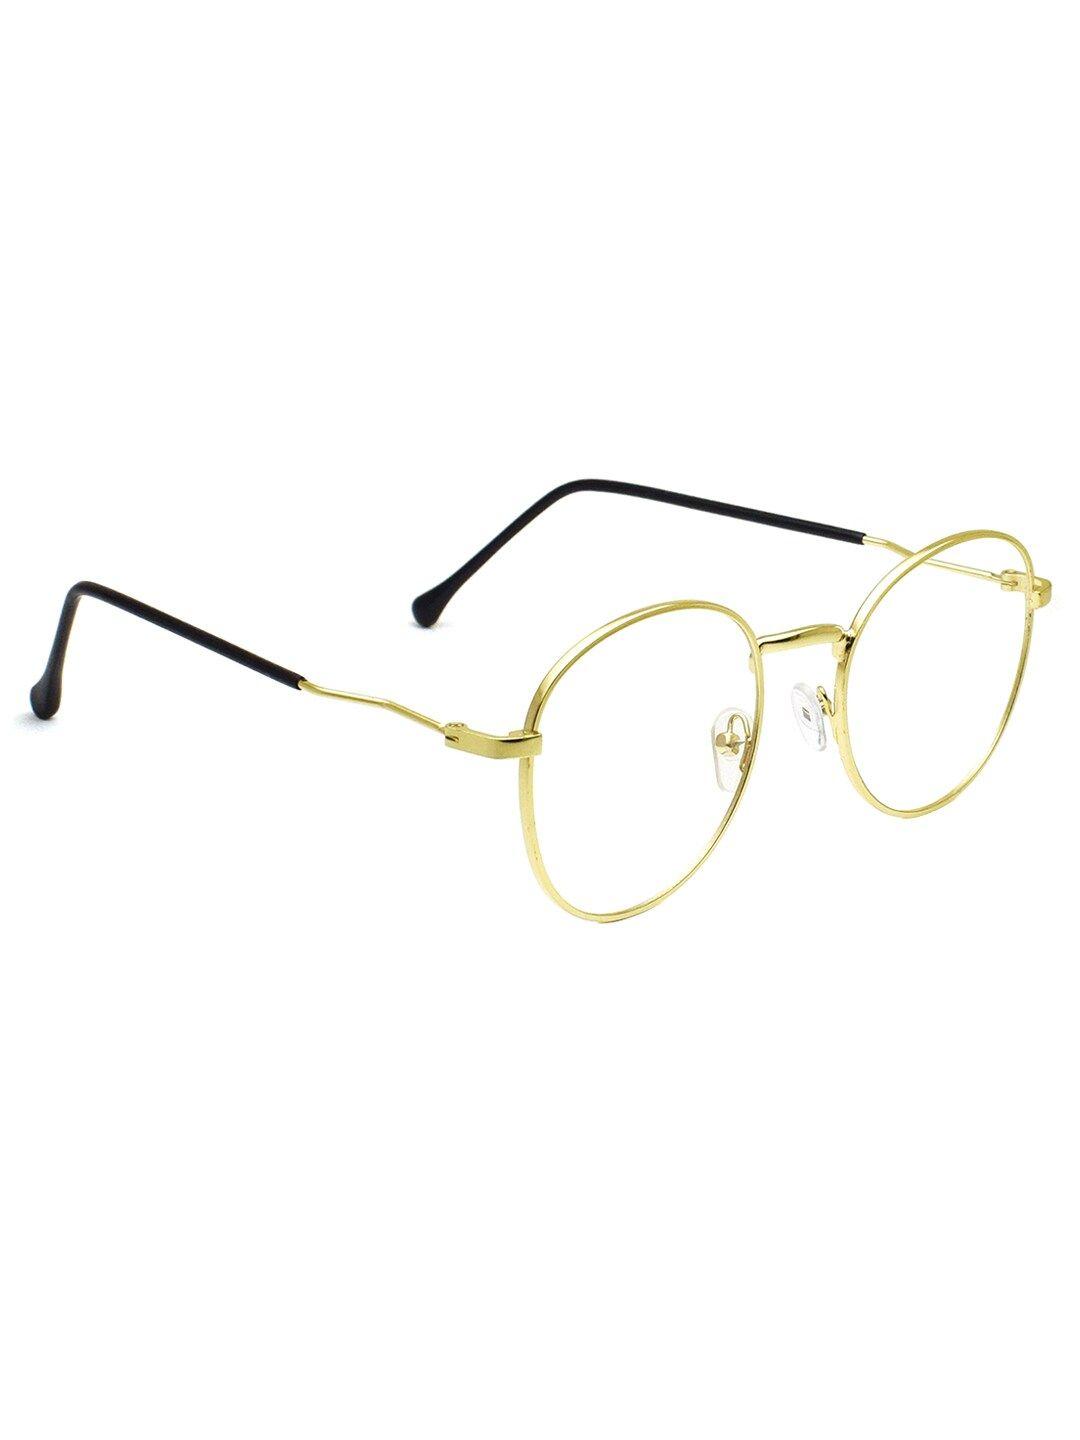 peter jones eyewear unisex gold-toned & black full rim round frames